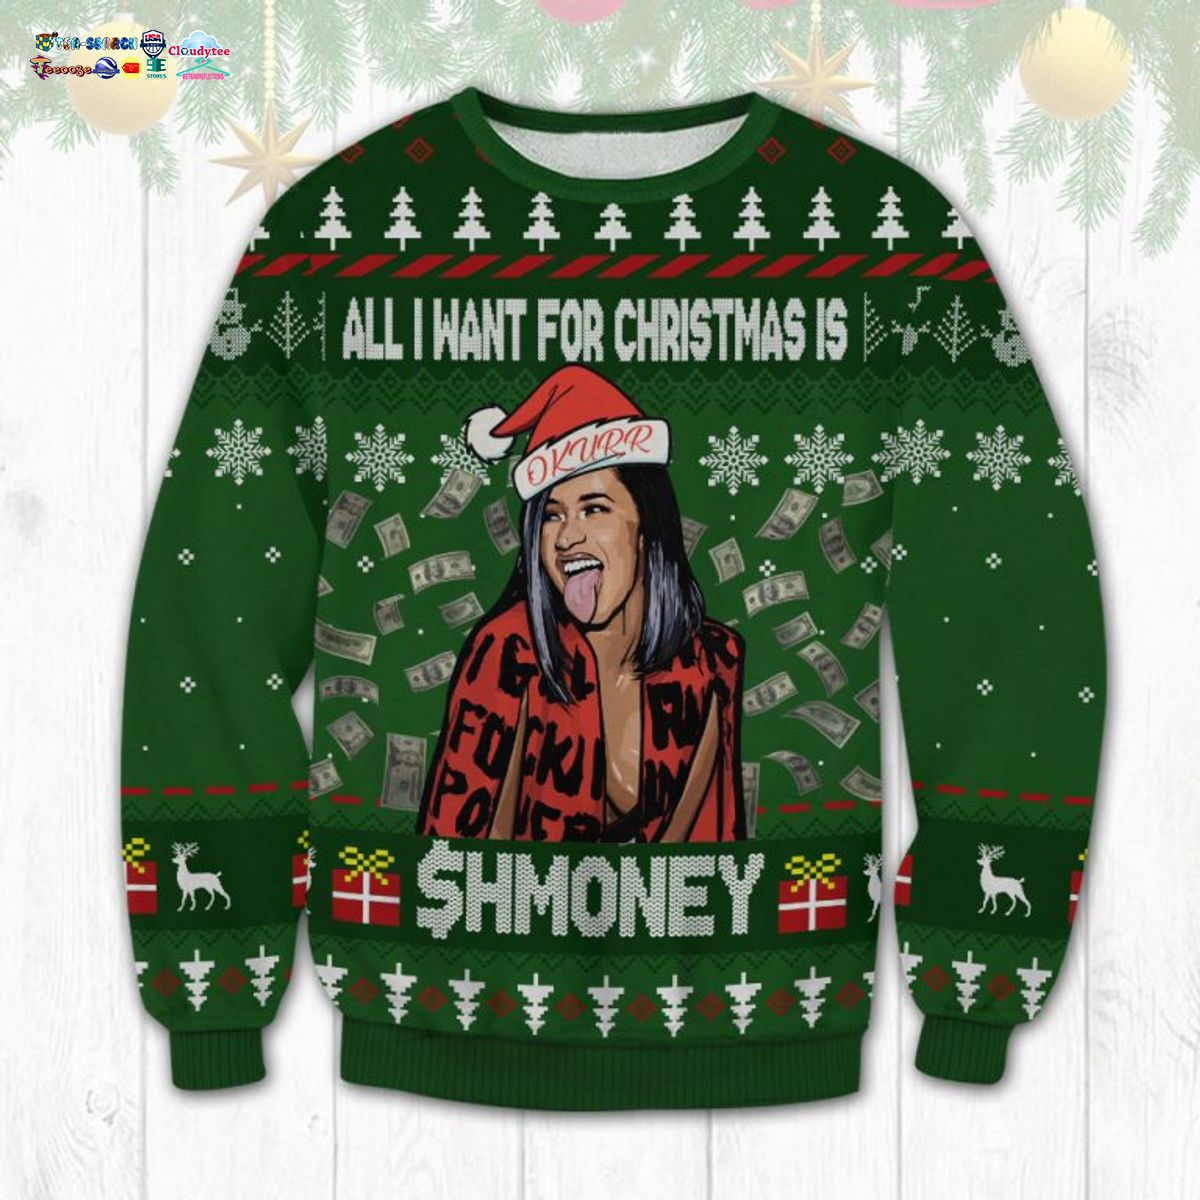 Cardi B Meme All I Want For Christmas Is Shmoney Ugly Christmas Sweater